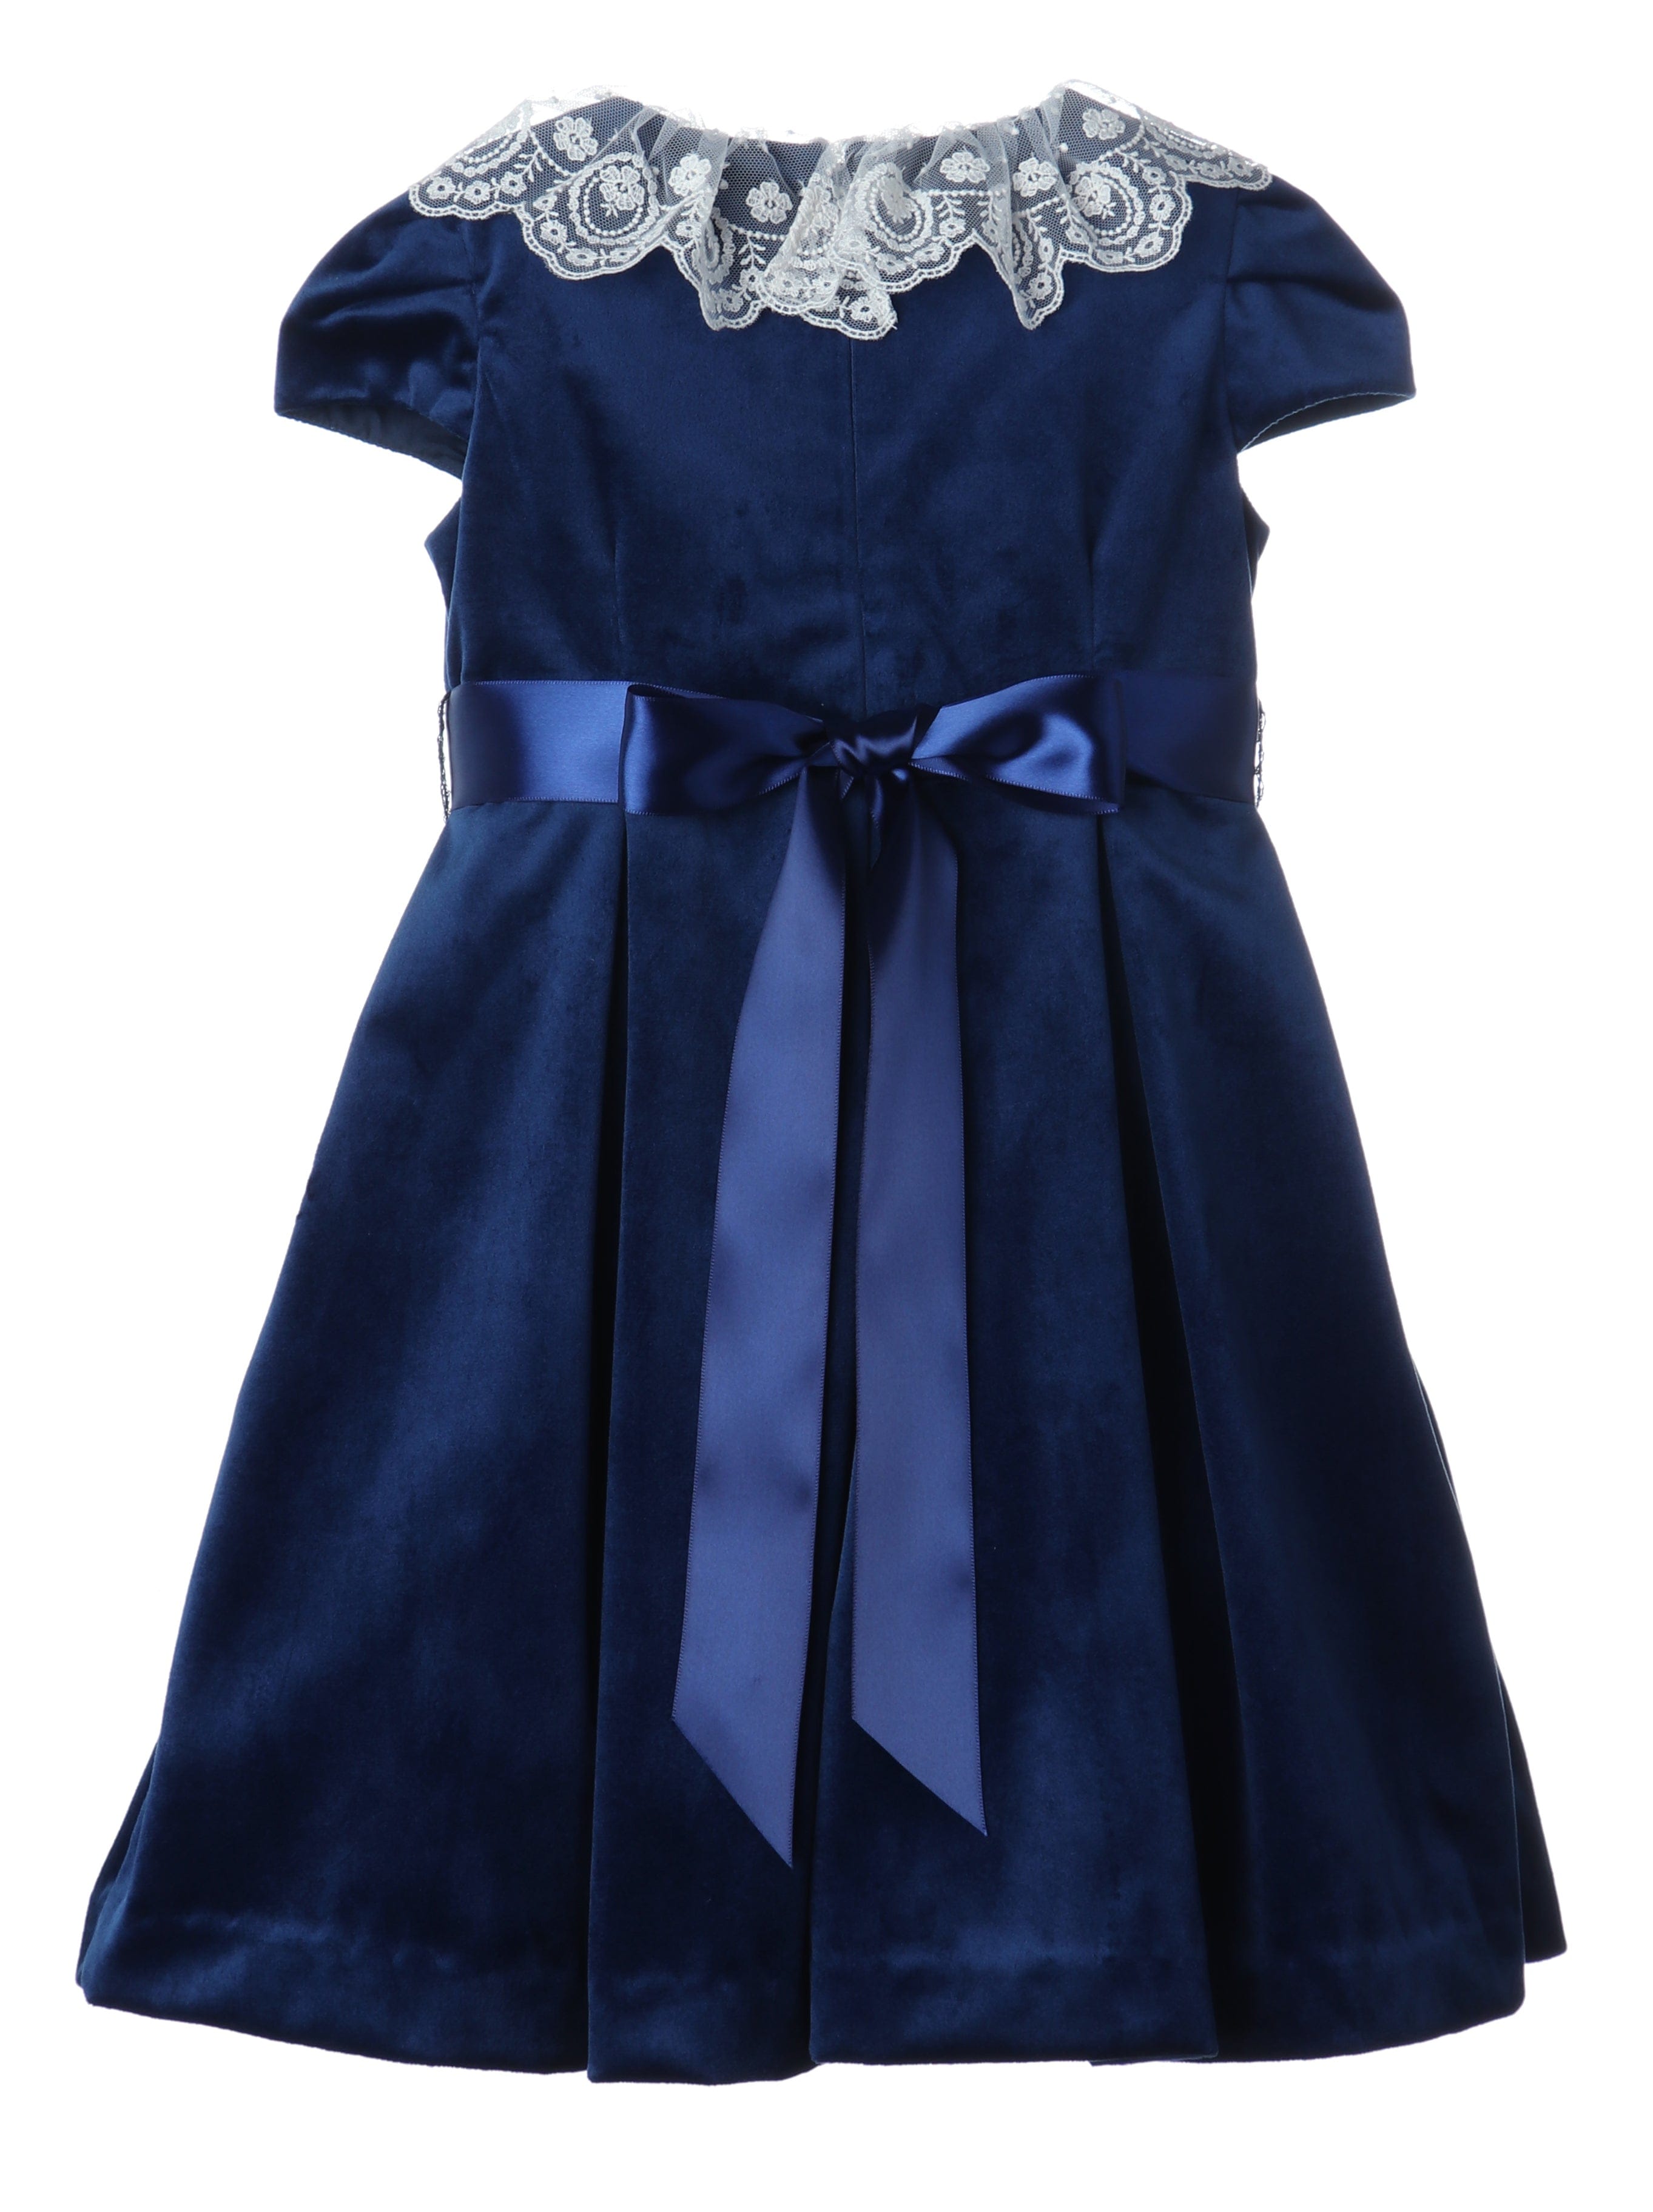 C&A - Casero & Associates Casero & Associates Velvet Dress With Lace - Little Miss Muffin Children & Home